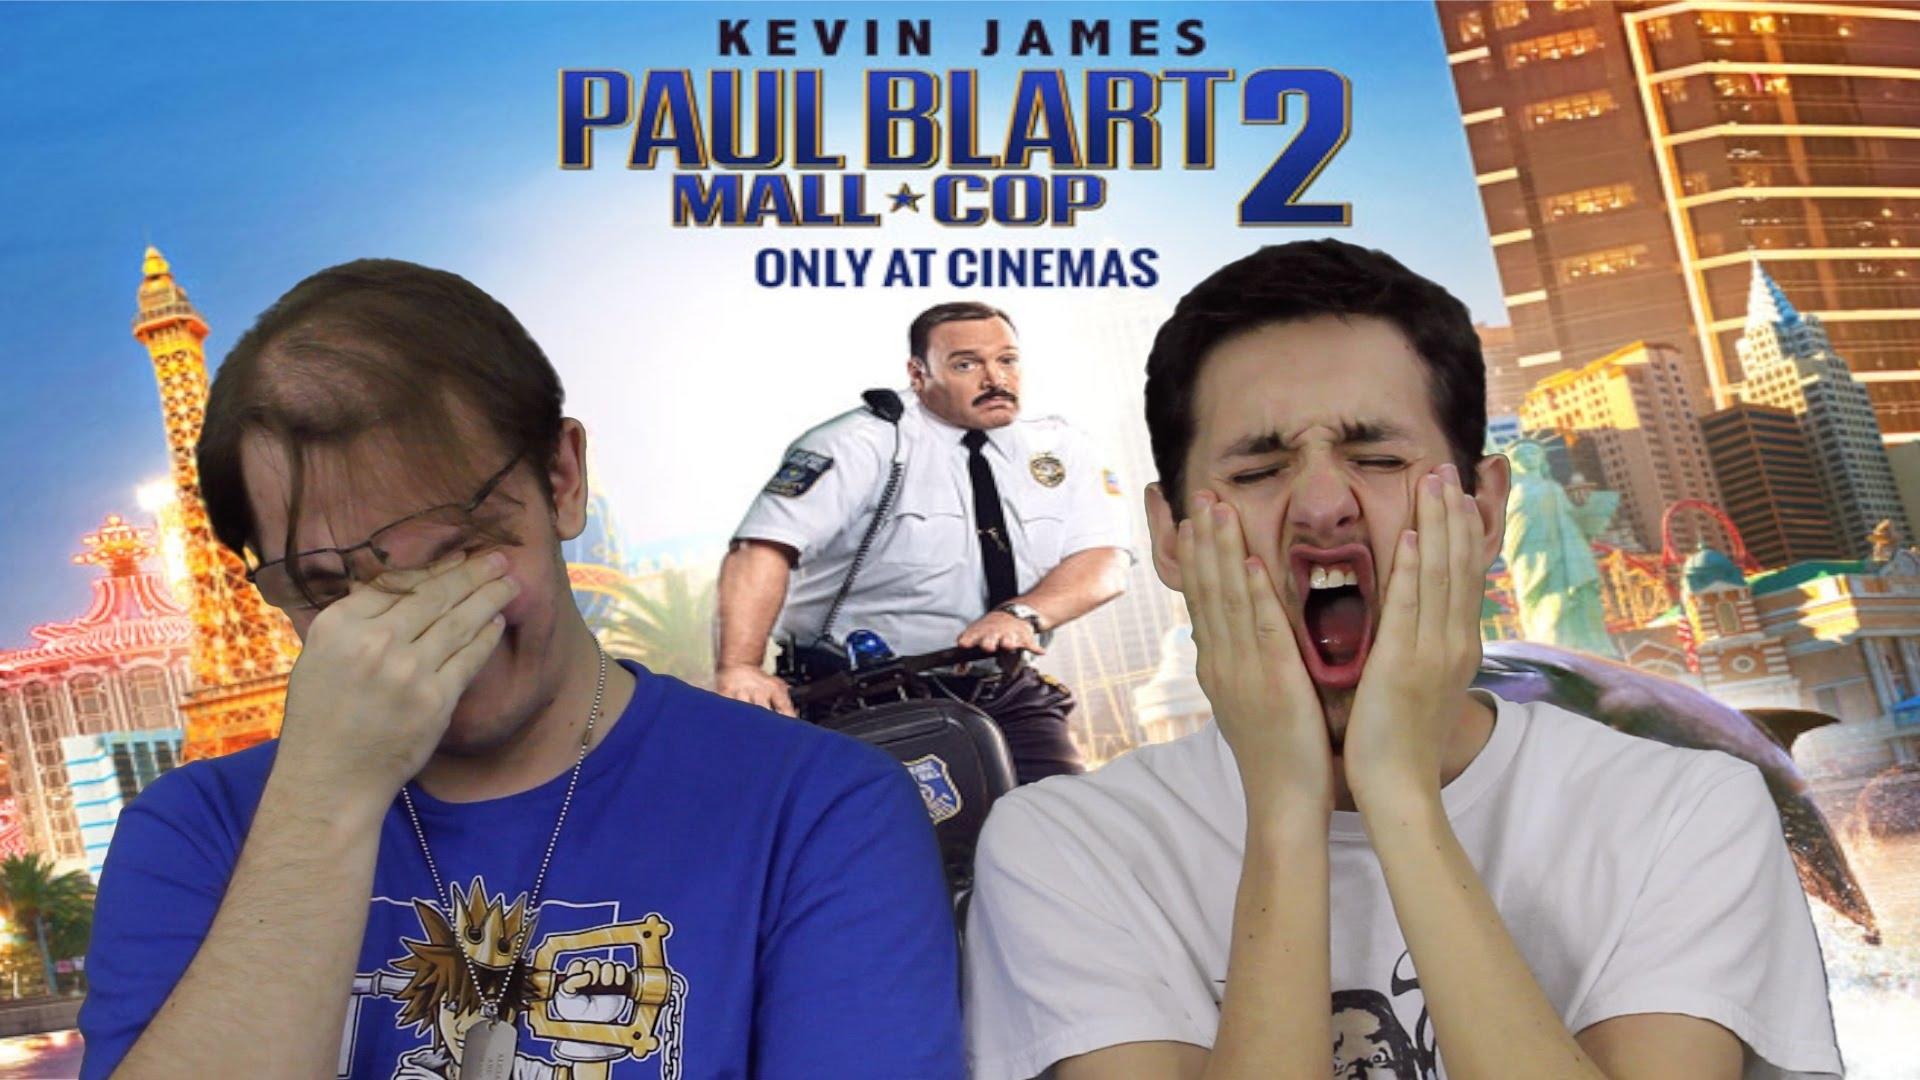 Paul Blart Mall Cop 2 wallpapers HD quality